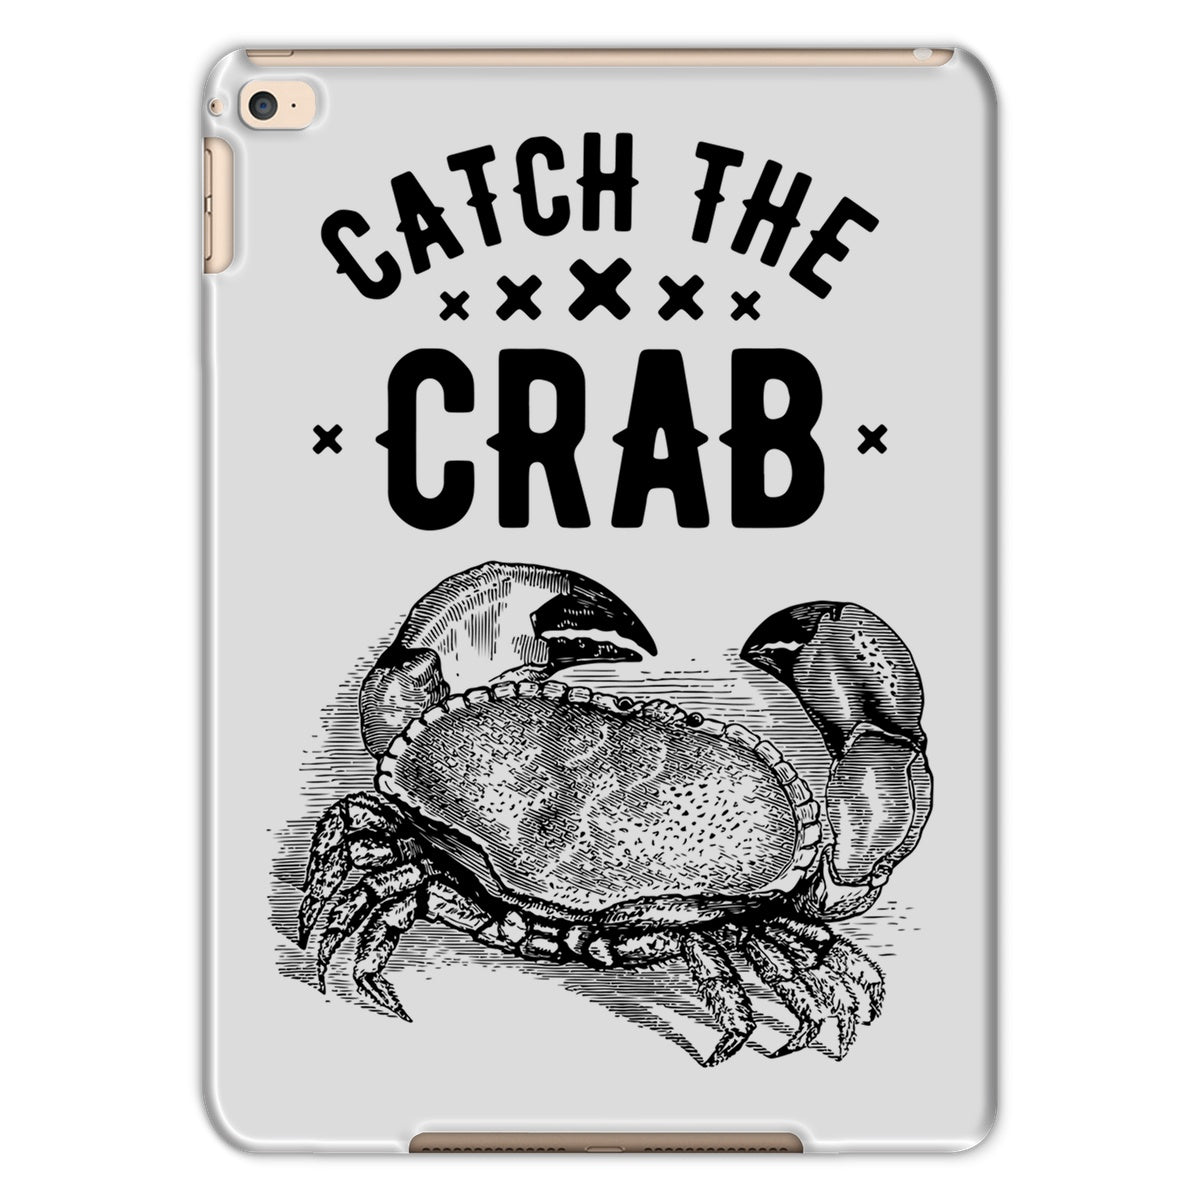 AQUA B&amp;W - 07 - Catch the crab - Tablet-Hülle